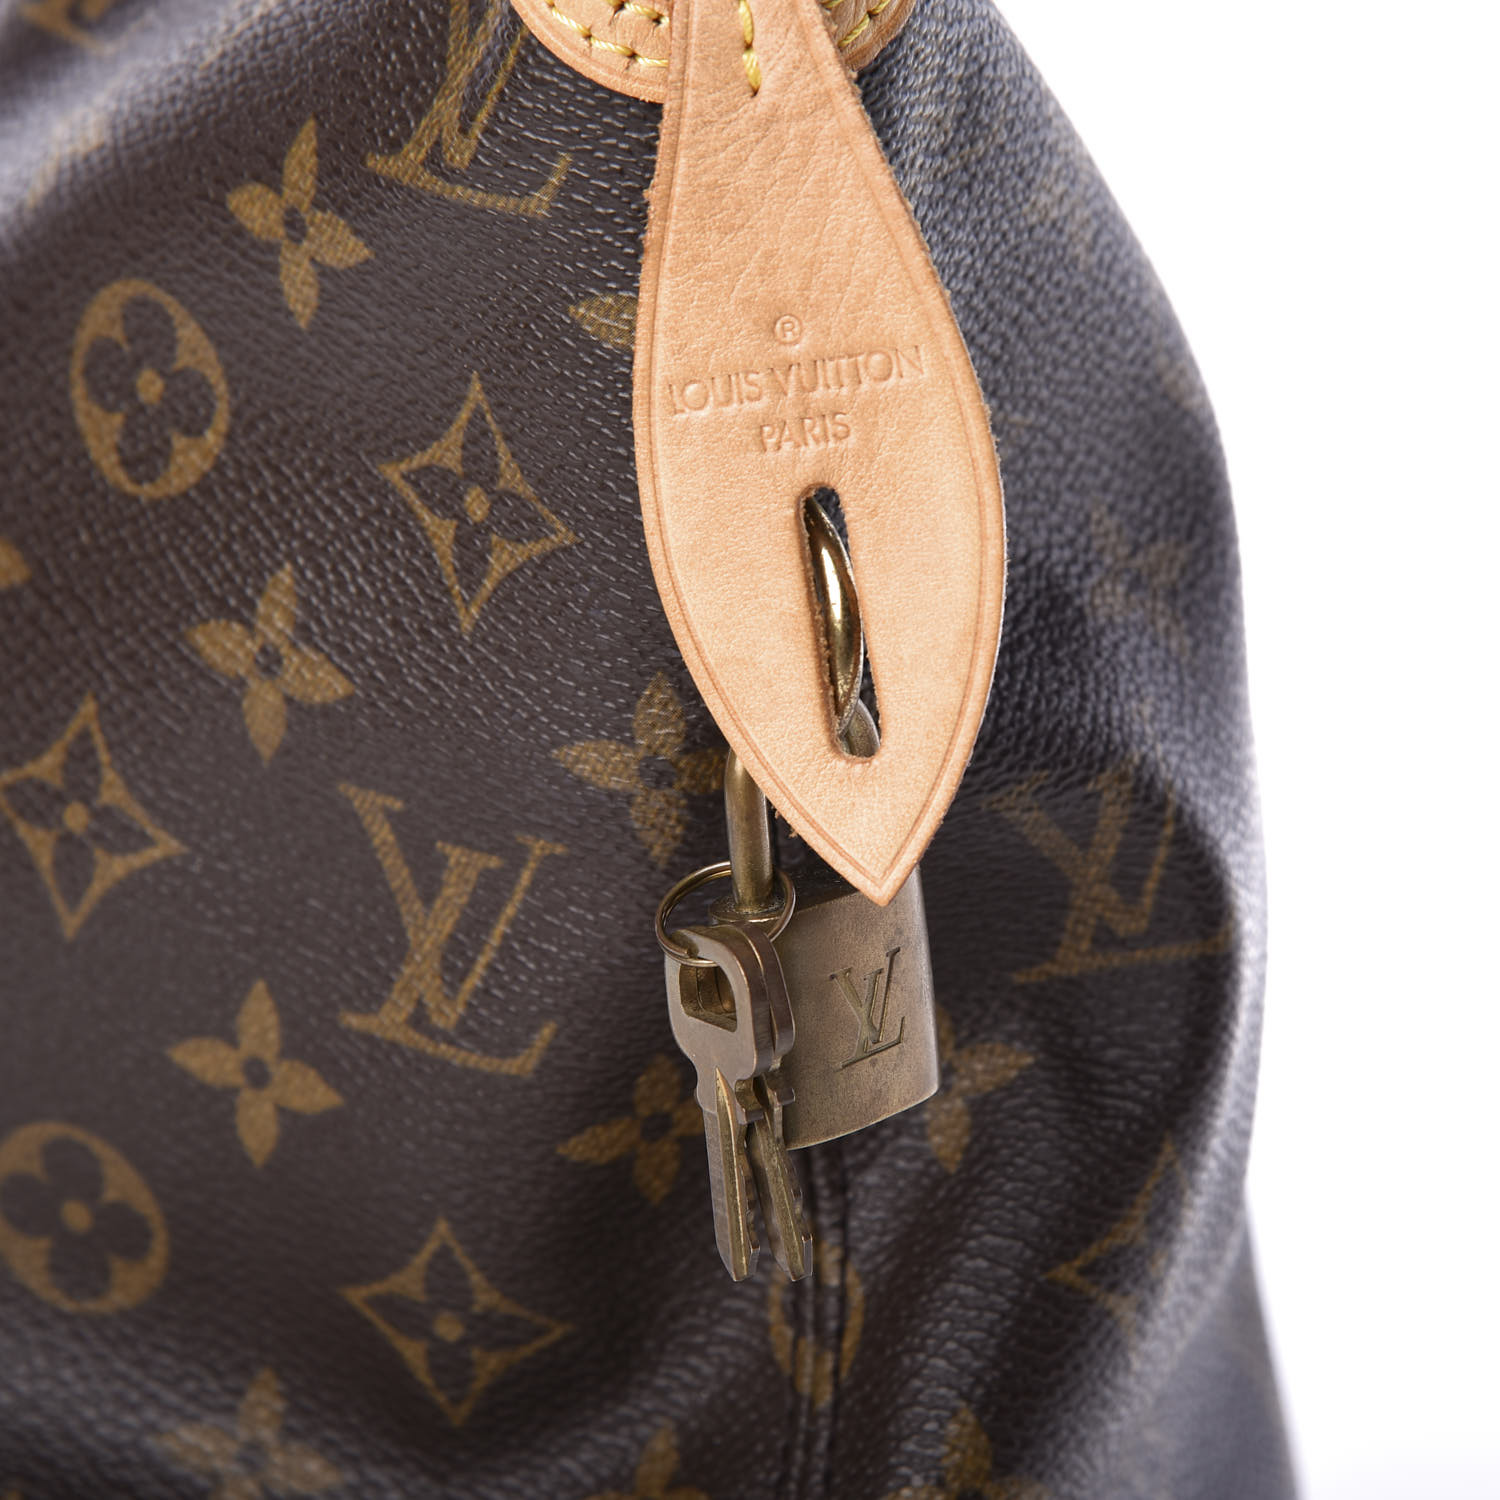 LOUIS VUITTON Monogram Lockit Vertical Handbag